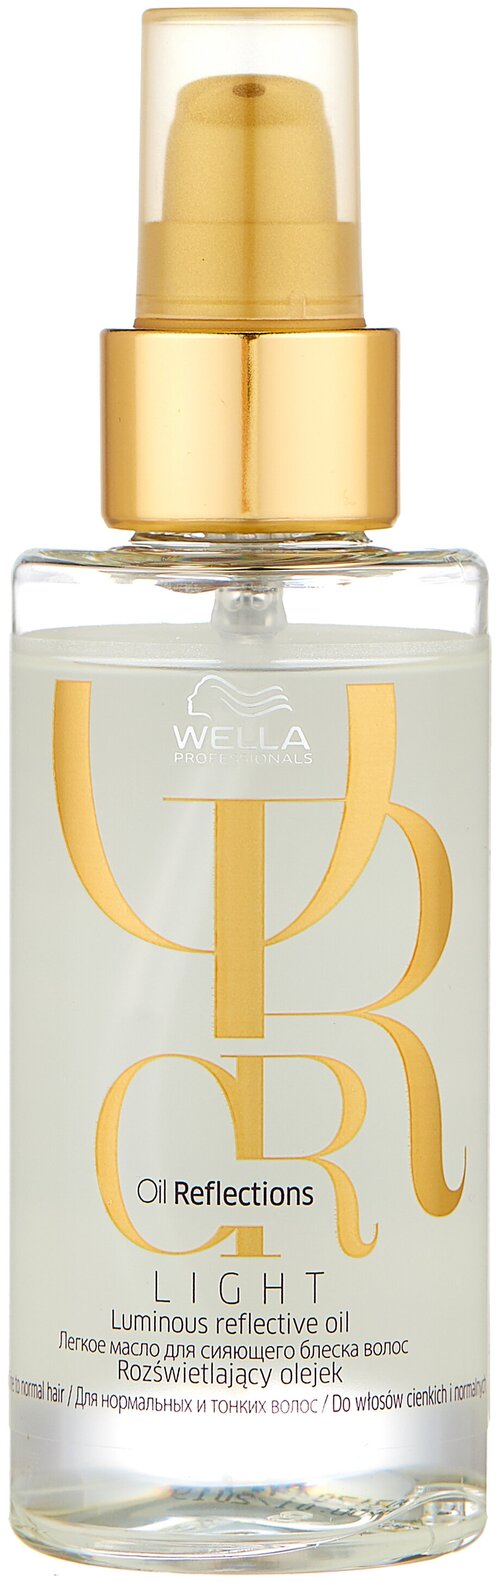 Wella Professionals Oil Reflections Легкое масло для сияющего блеска волос, 100 г, 100 мл, бутылка